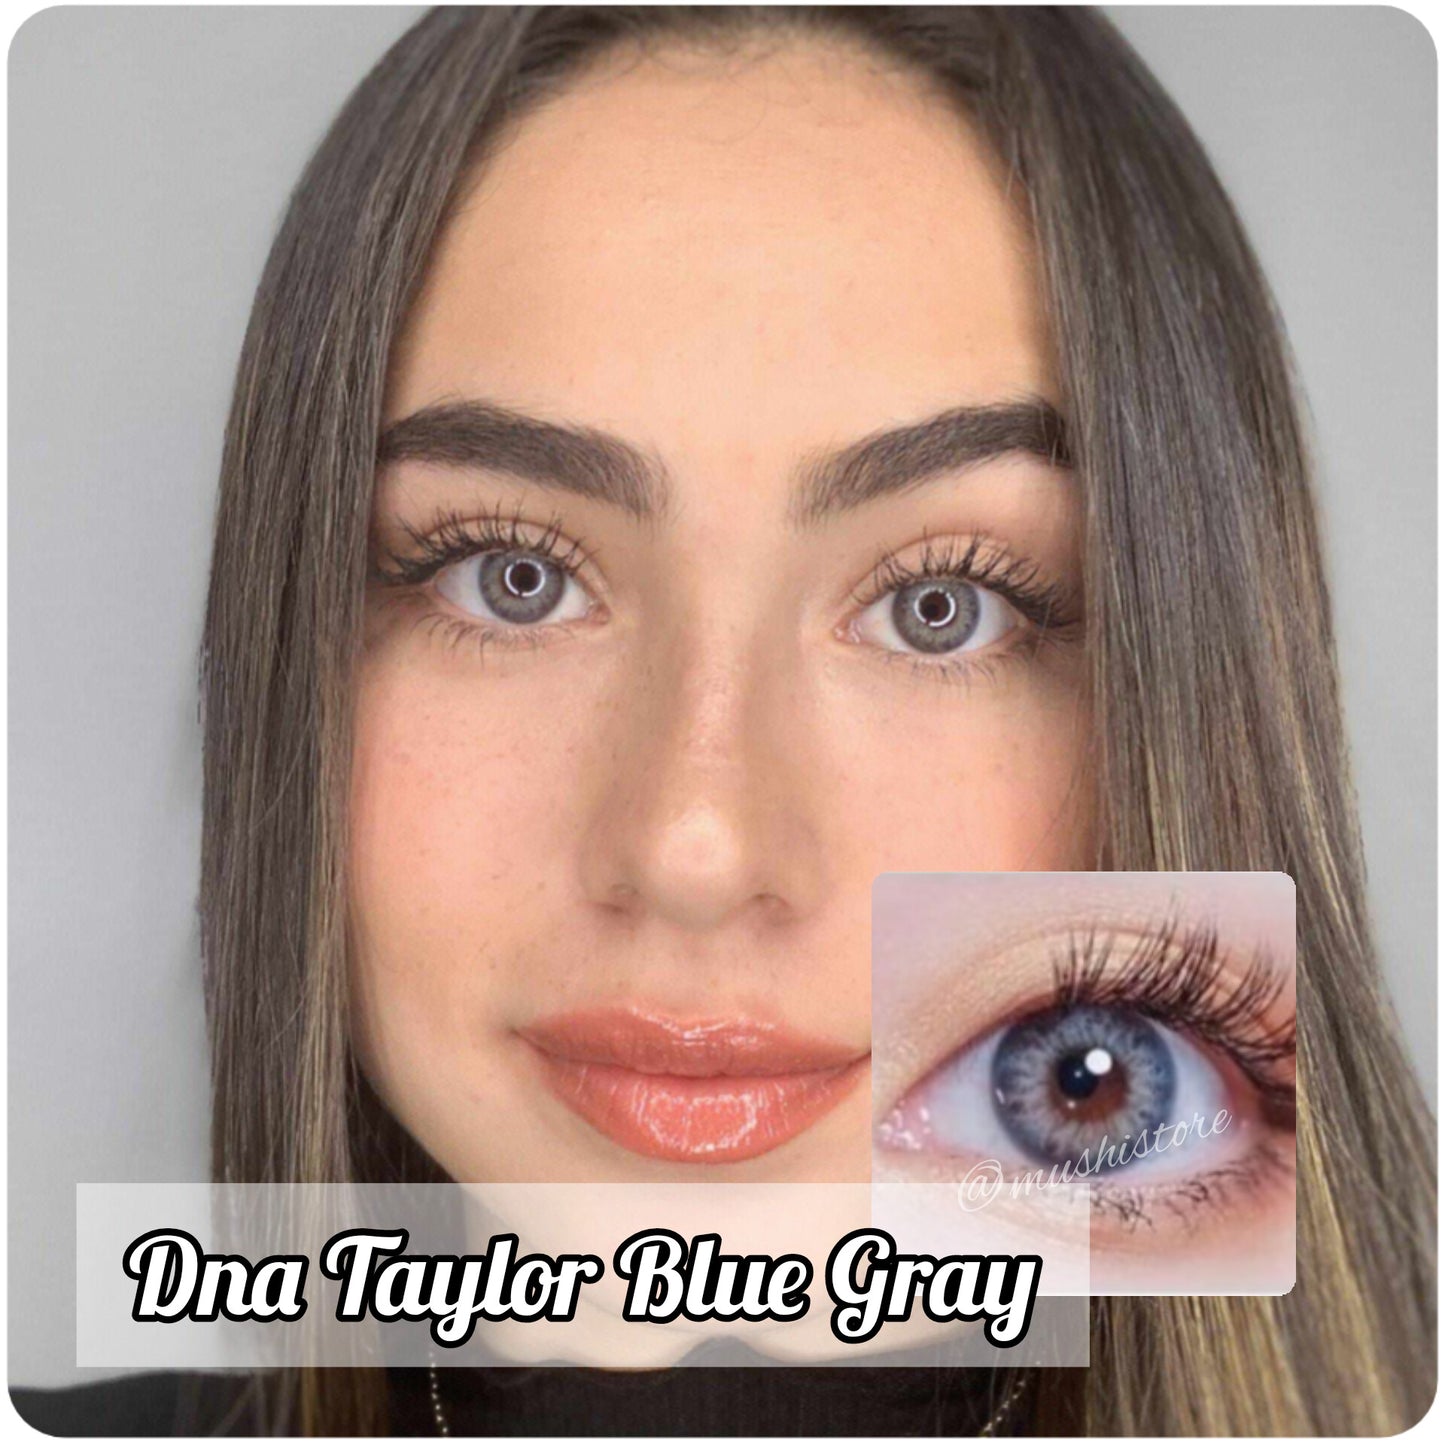 DNA Taylor Blue Gray